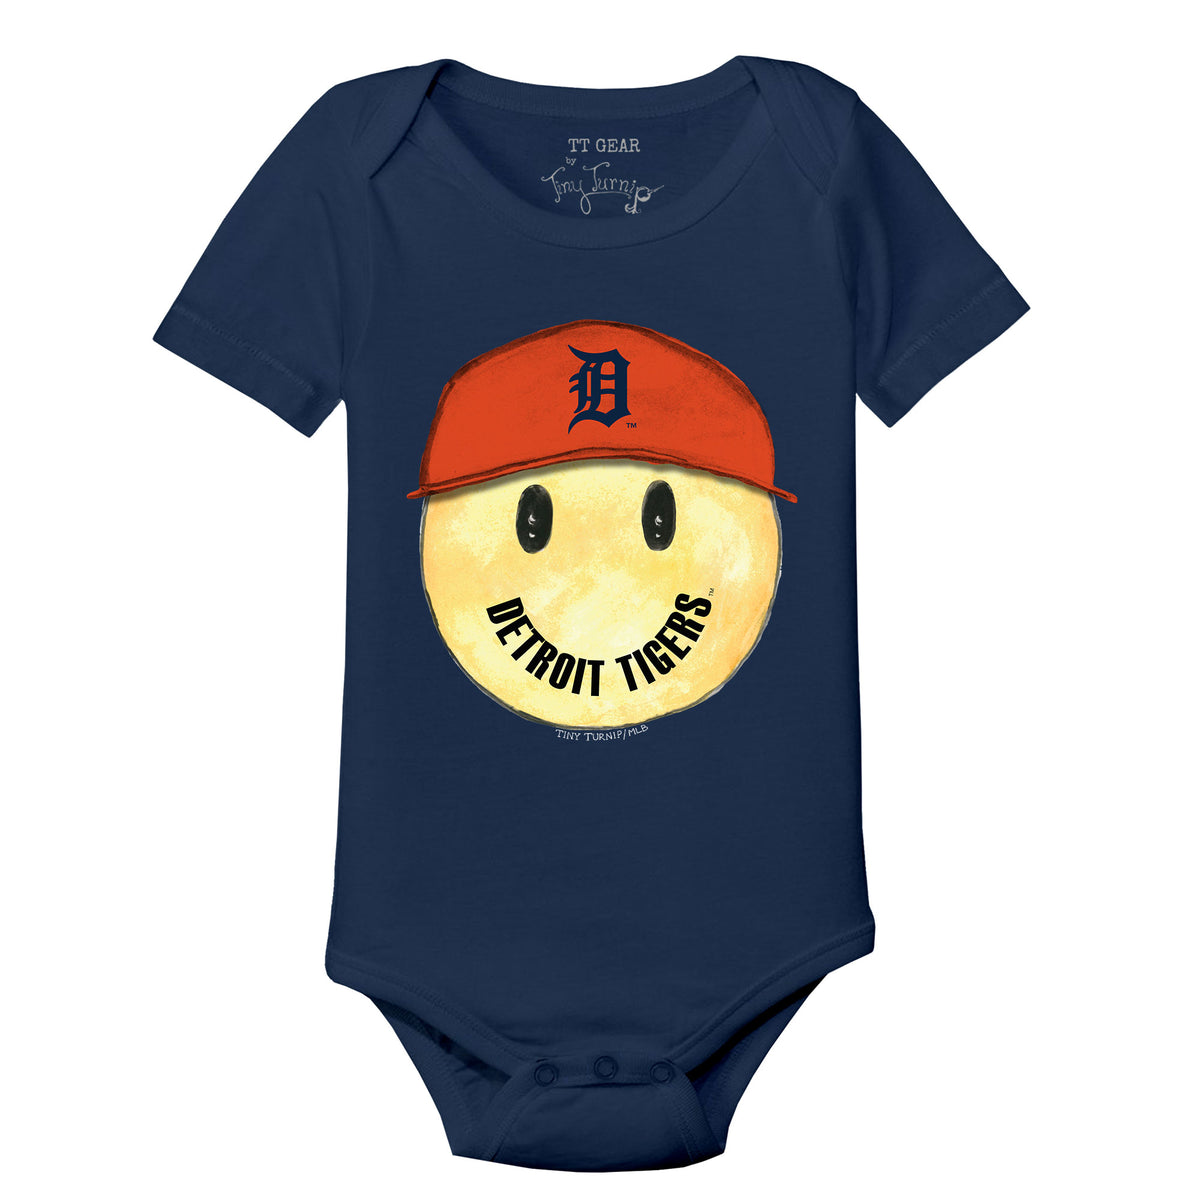 Detroit Tigers Smiley Short Sleeve Snapper